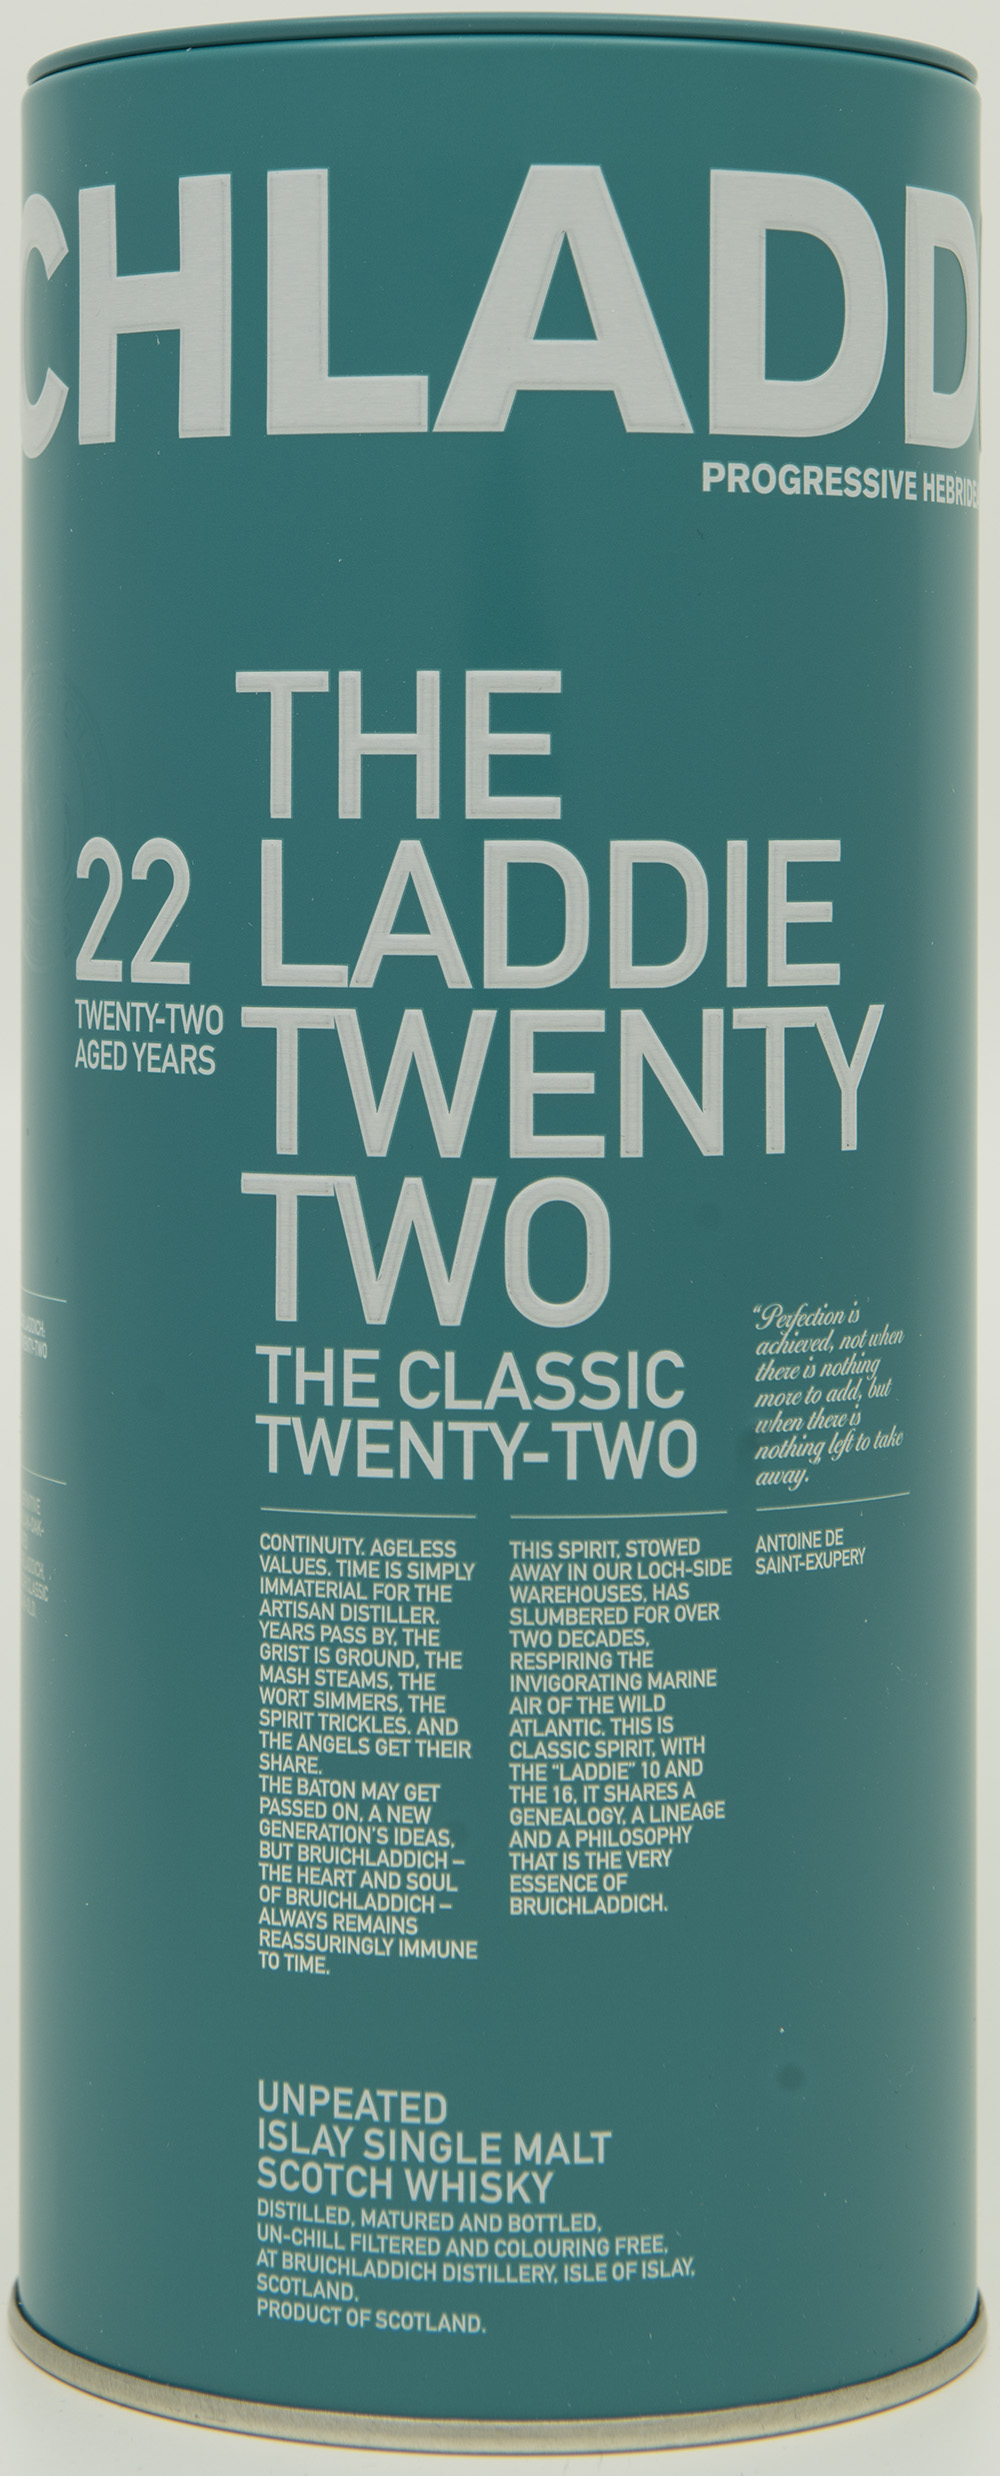 Billede: DSC_0771 - Bruichladdich The Laddie Twenty Two - tube front.jpg